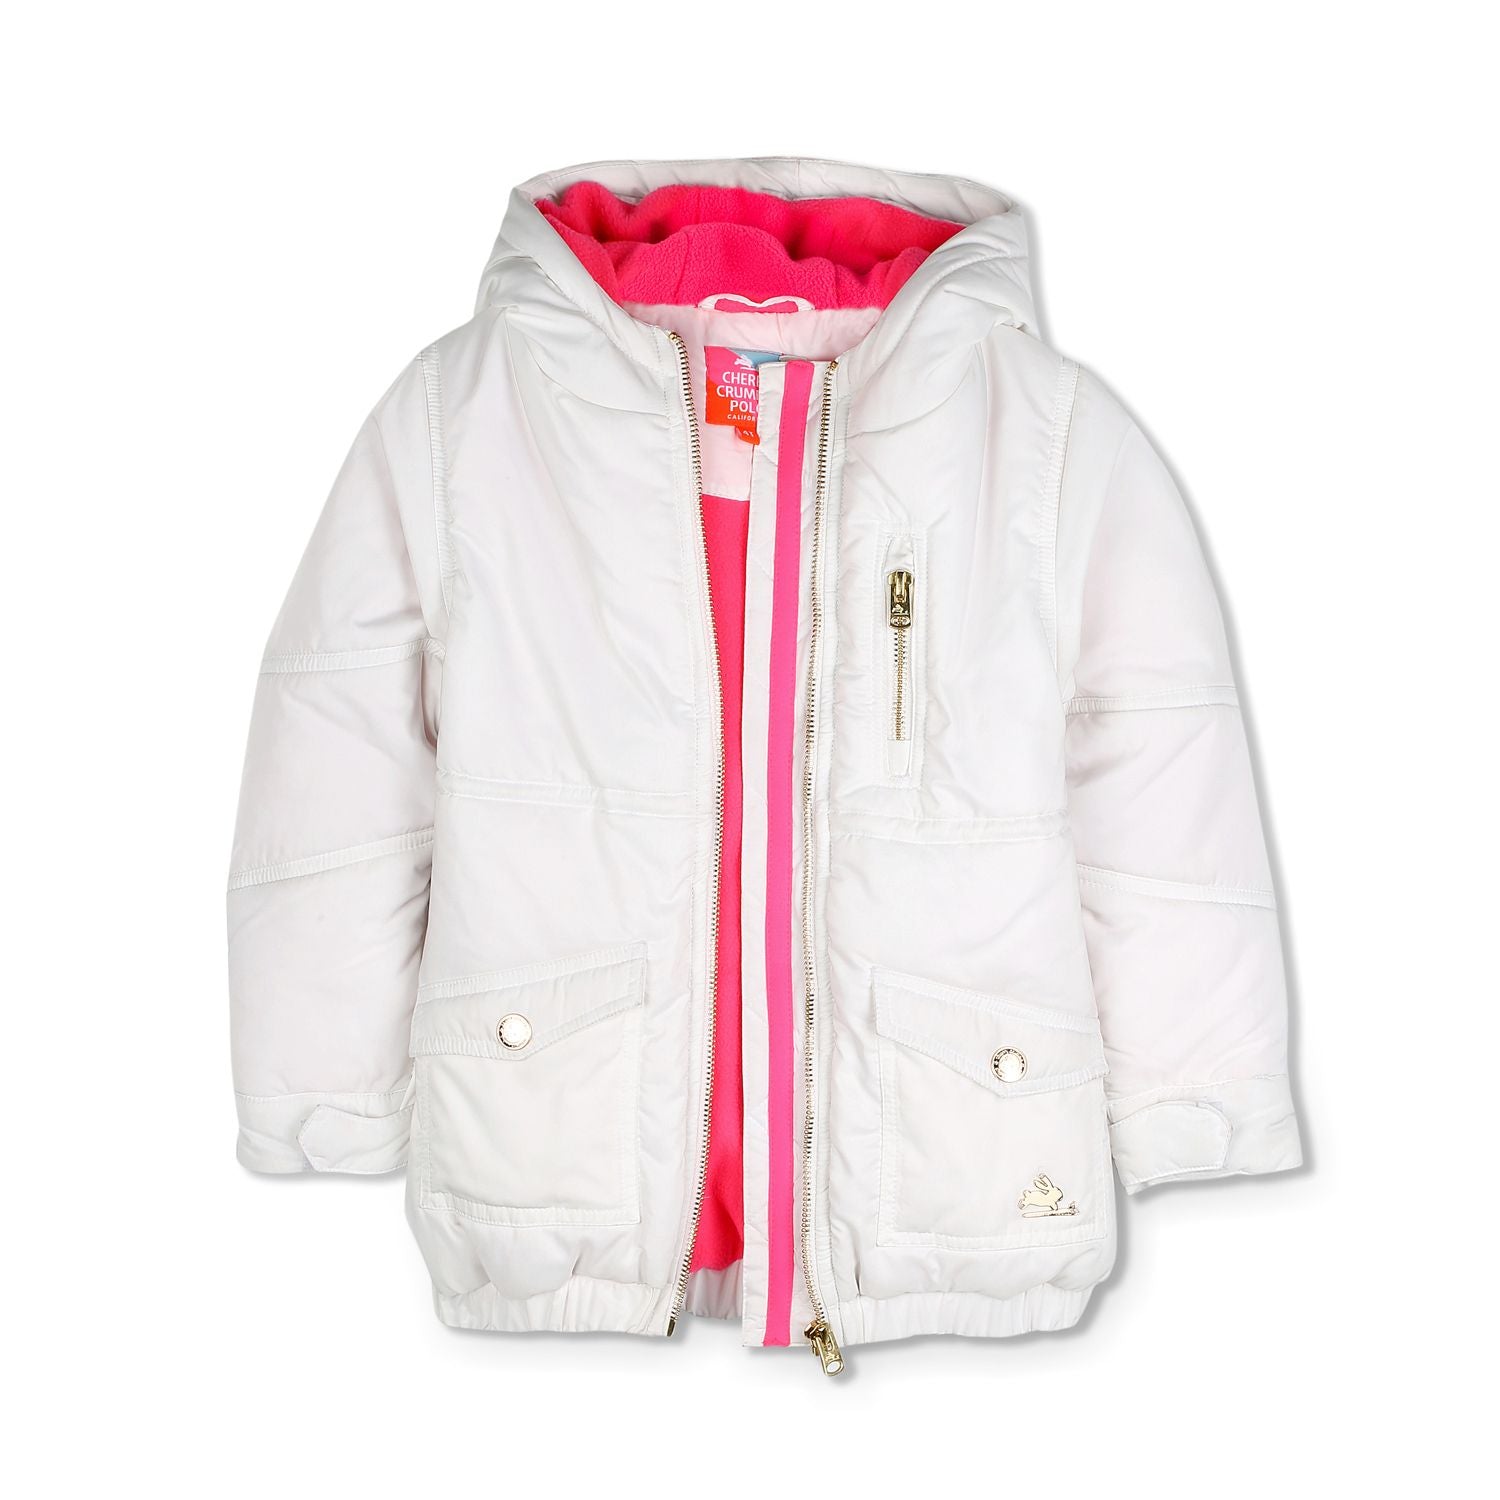 Snow Anorak Jacket for Boys